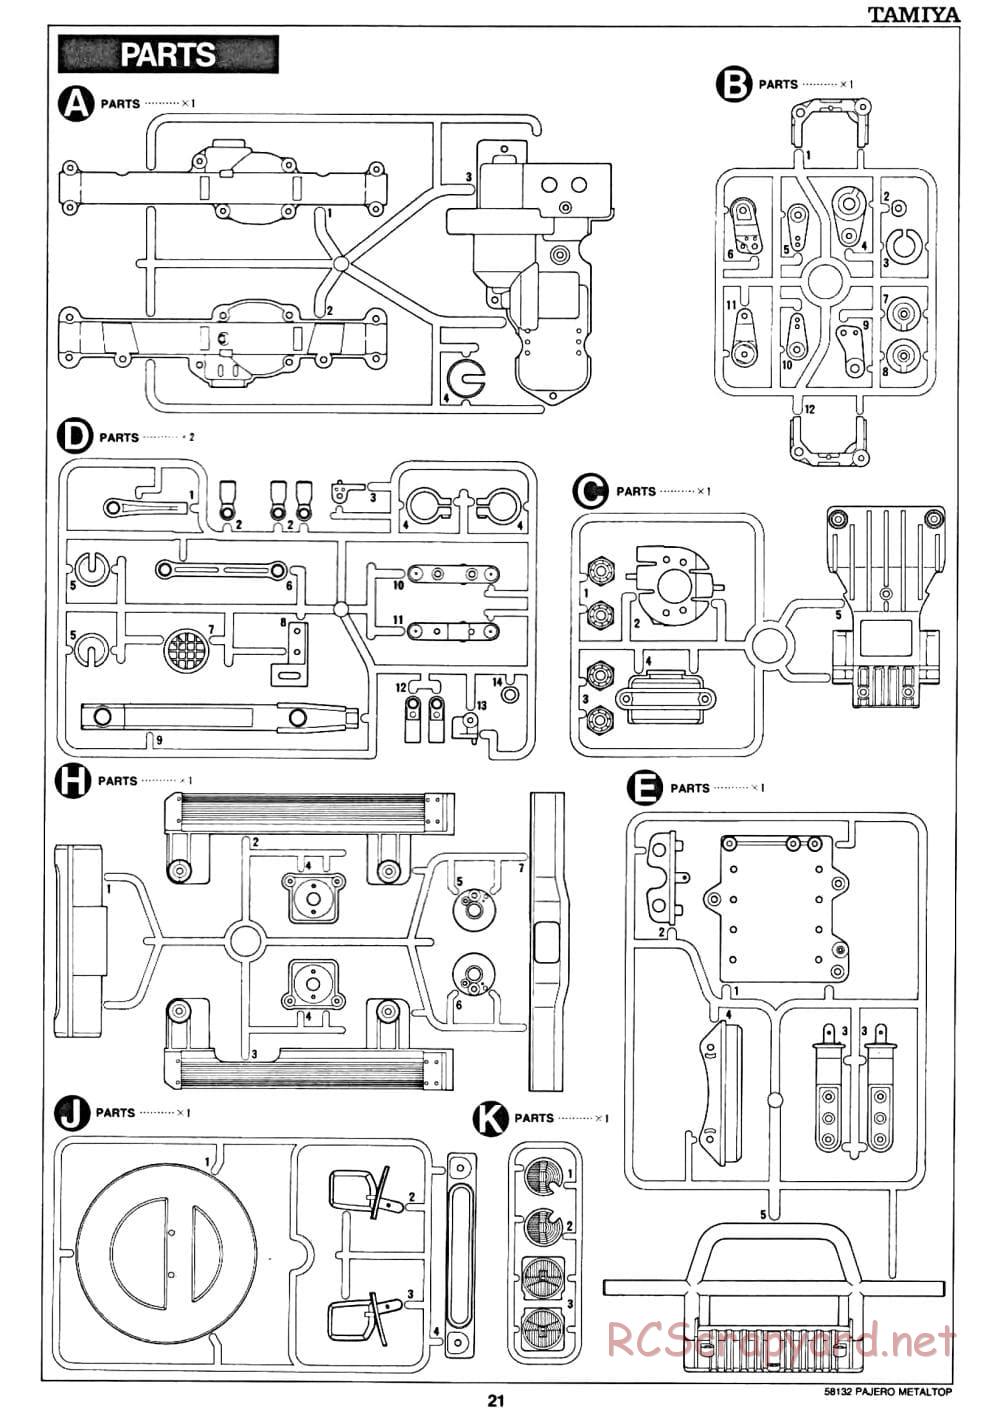 Tamiya - Mitsubishi Pajero Metaltop Wide - CC-01 Chassis - Manual - Page 21